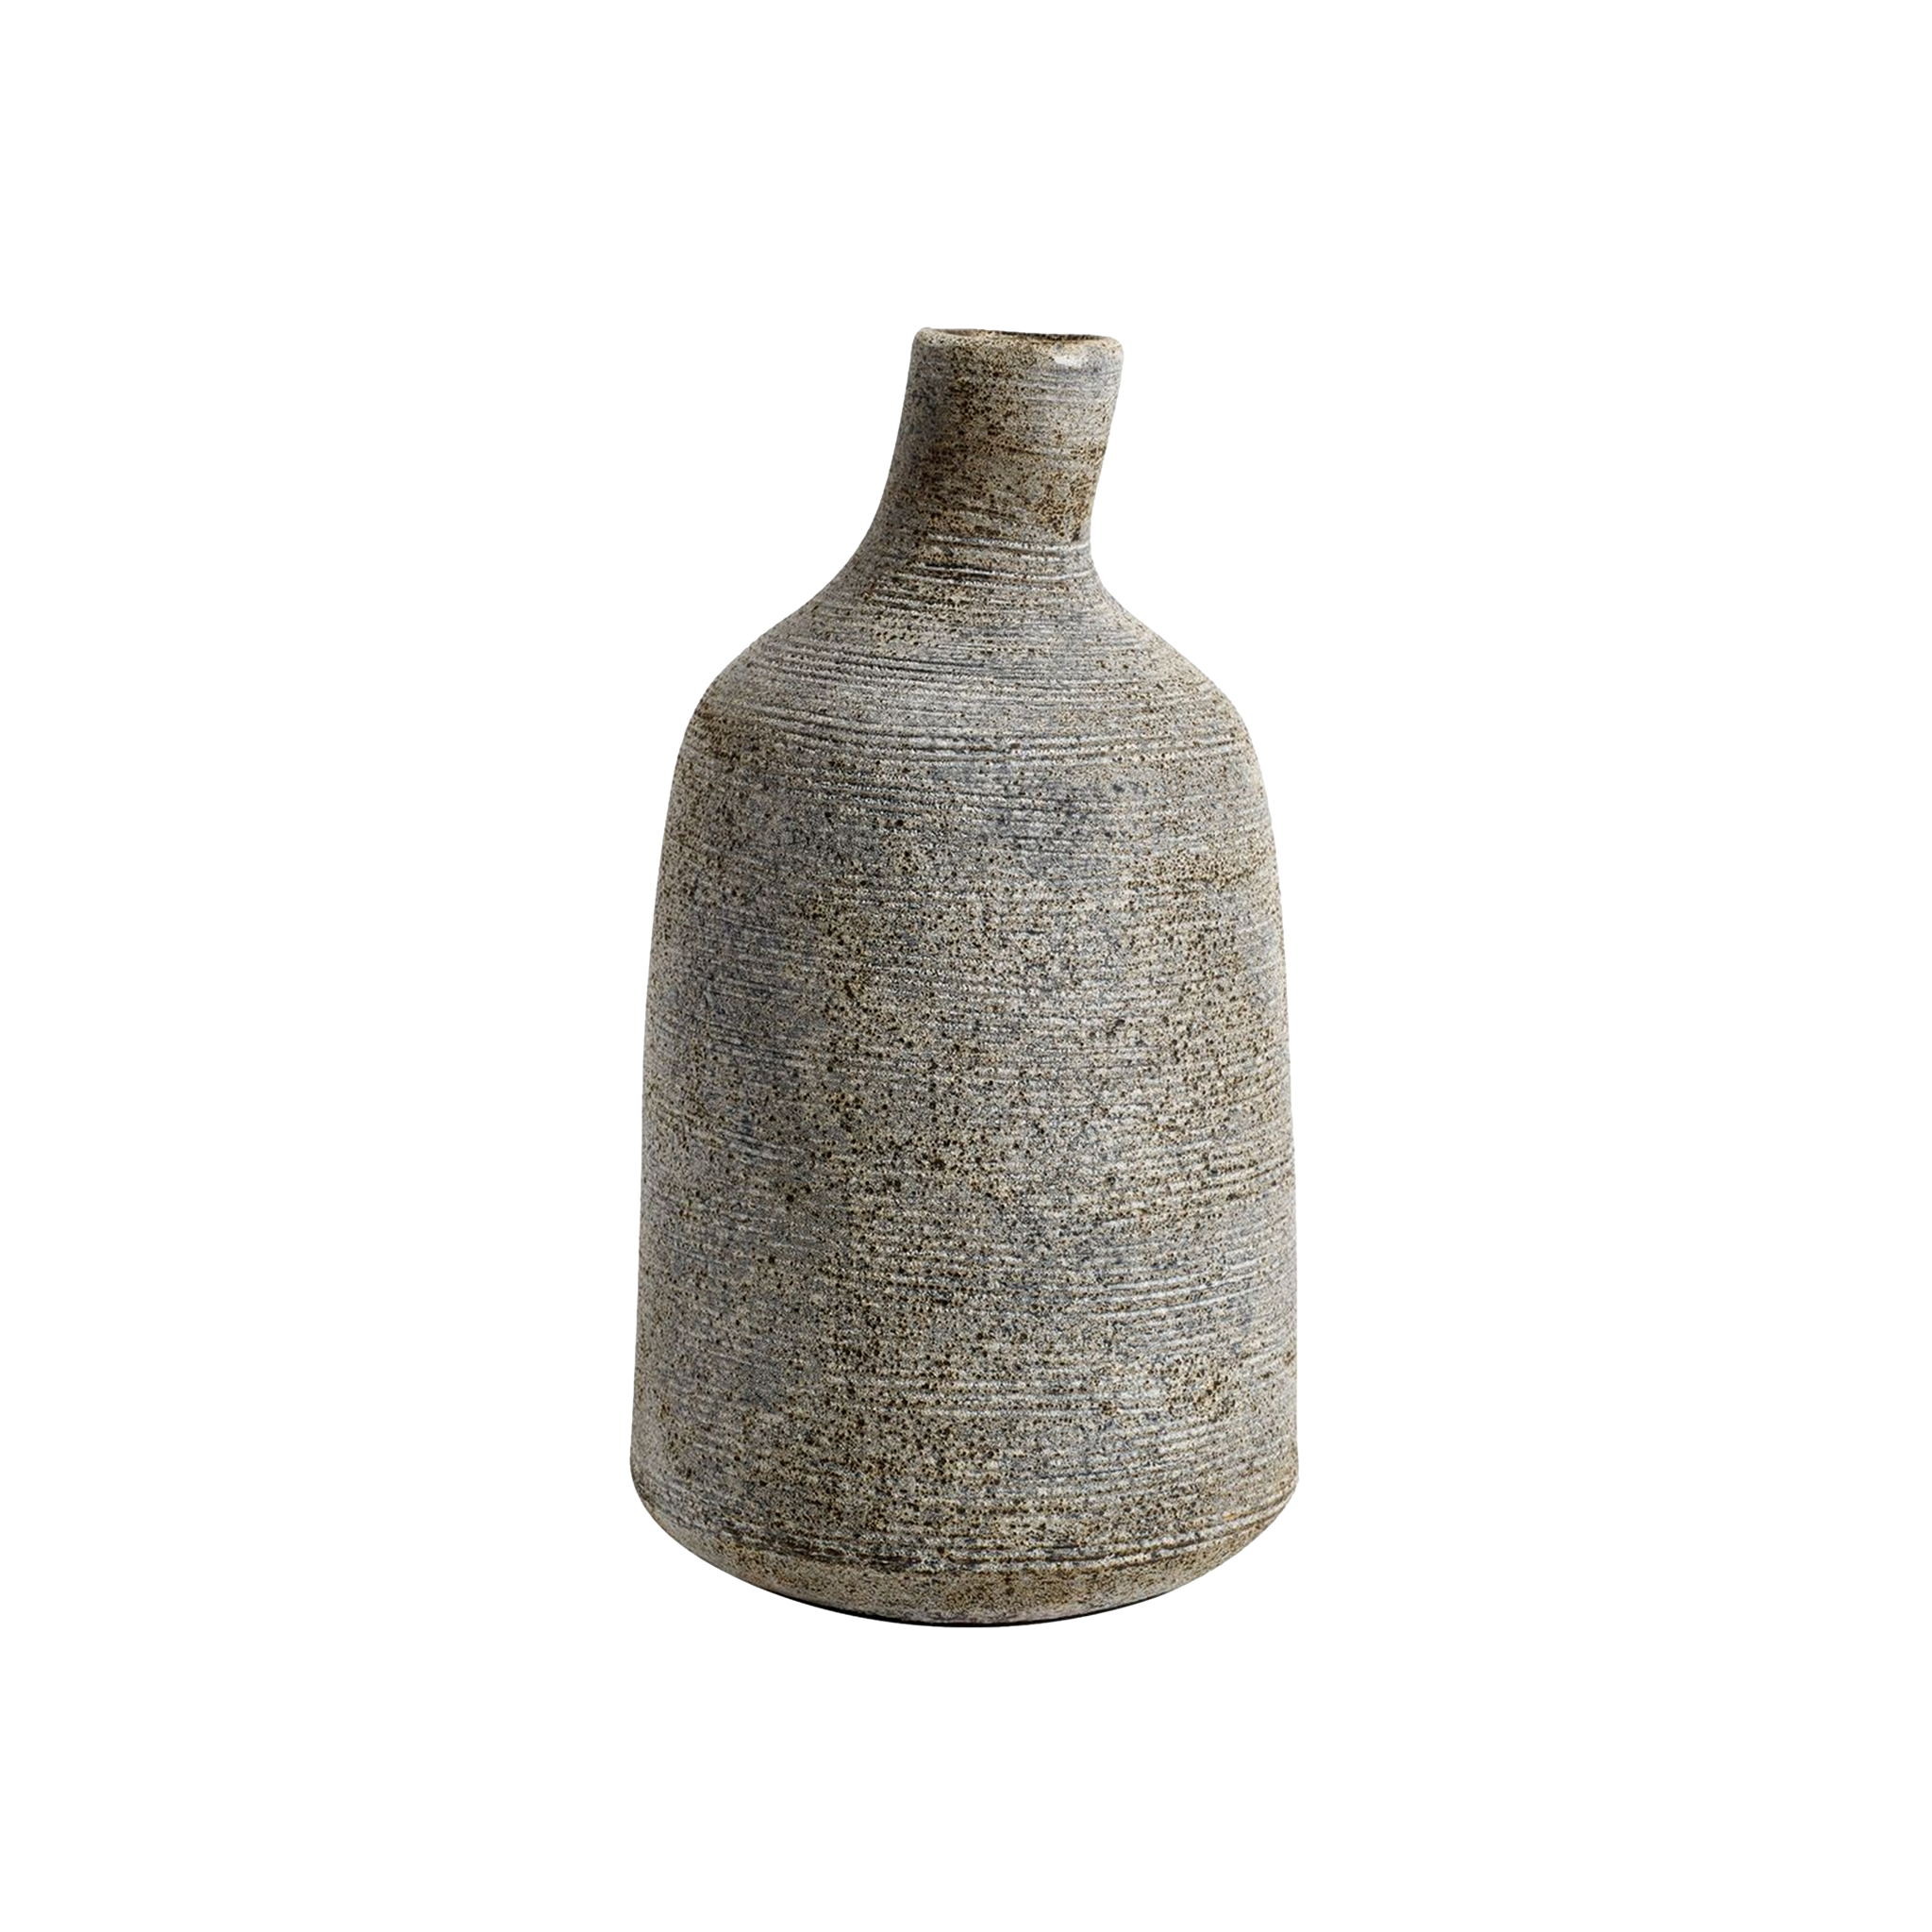 Stain Vase (Large)